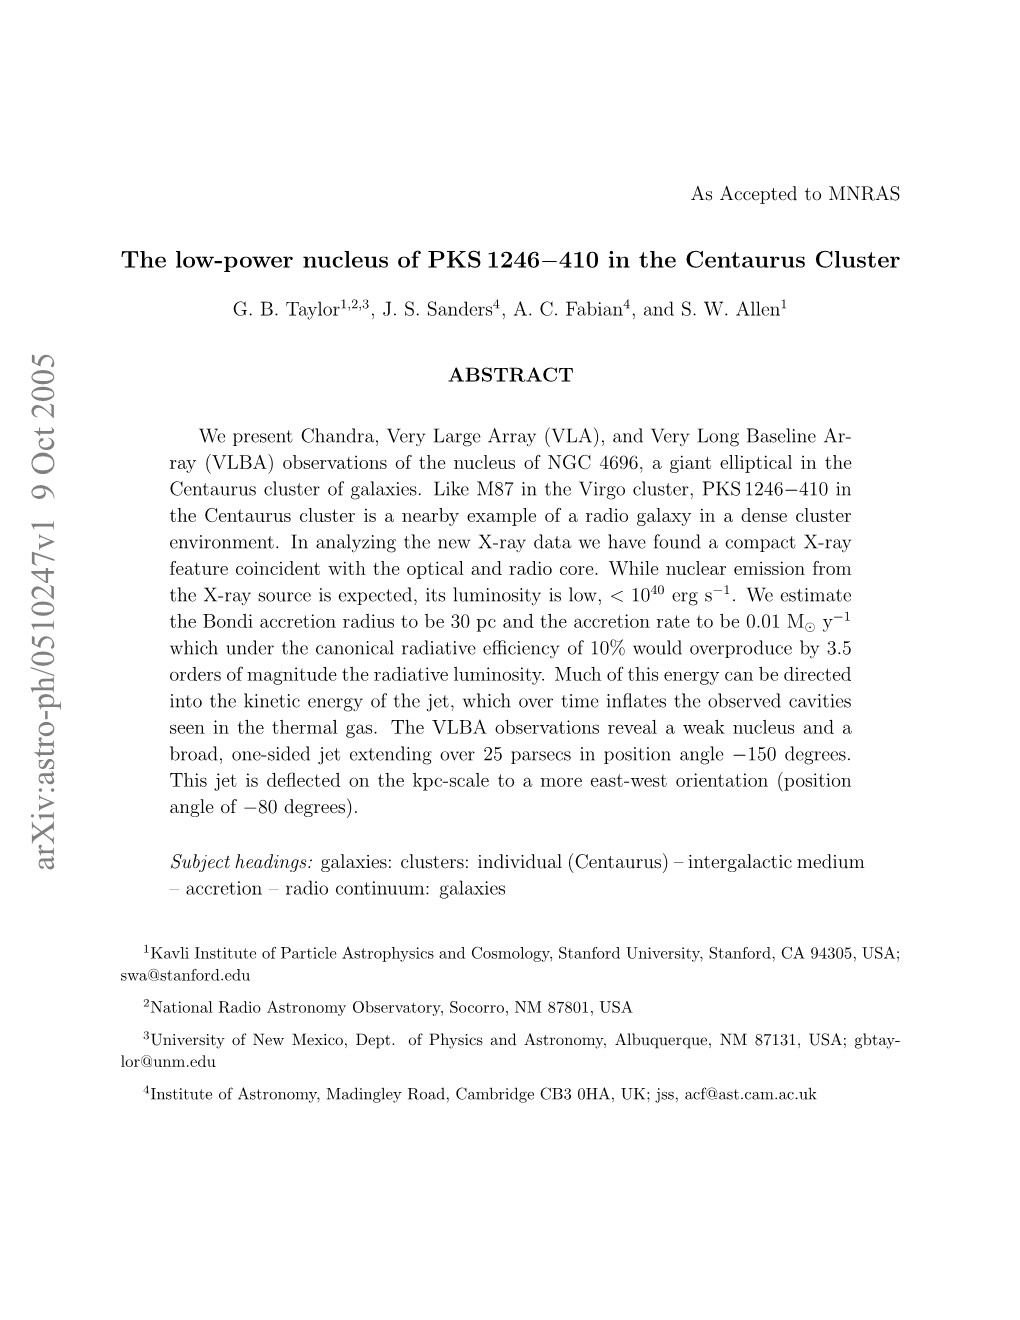 The Low-Power Nucleus of PKS 1246-410 in the Centaurus Cluster